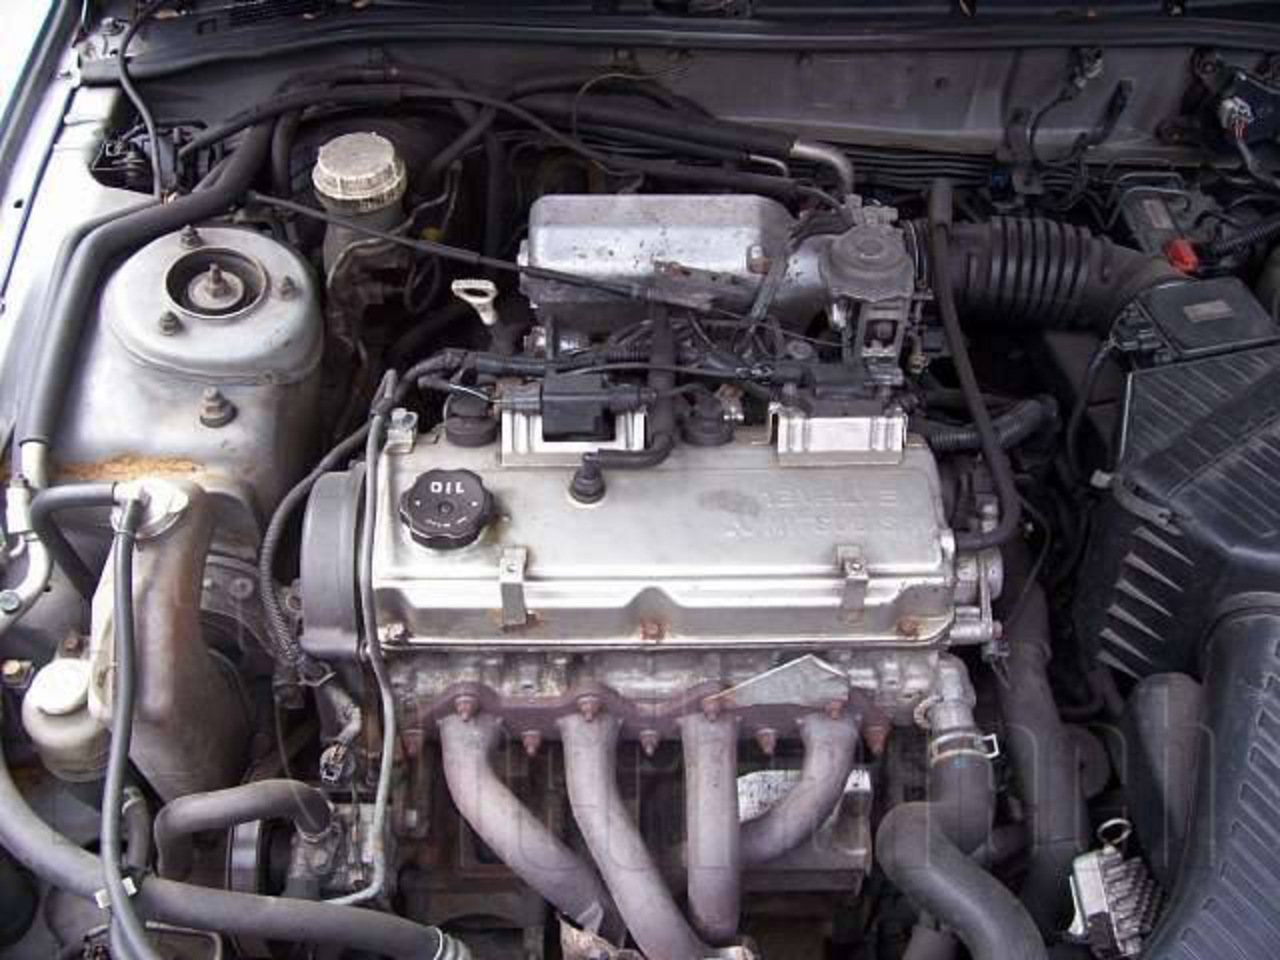 Двигатель мицубиси галант. Мотор Mitsubishi Galant g 4 63. Двигатель 4g63 Mitsubishi Galant. Мотор 2.4 Митсубиси Галант. Митсубиси Галант 8 2.4 мотор.